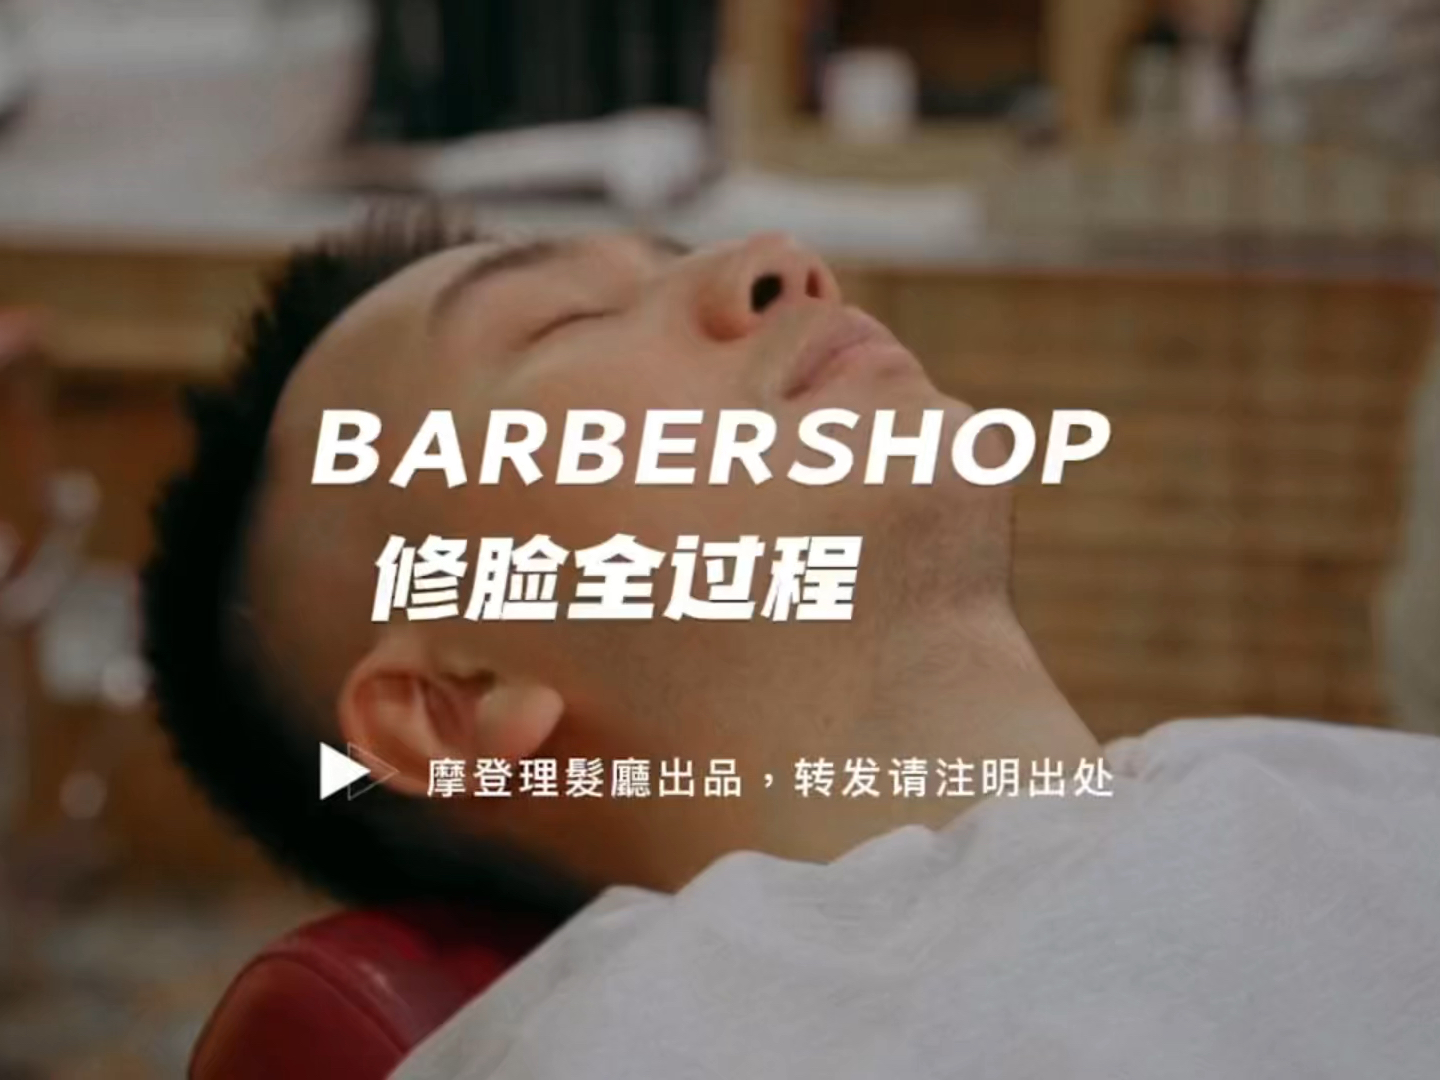 Barbershop 泡沫修面过程，随着刀锋的节奏慢慢入眠～